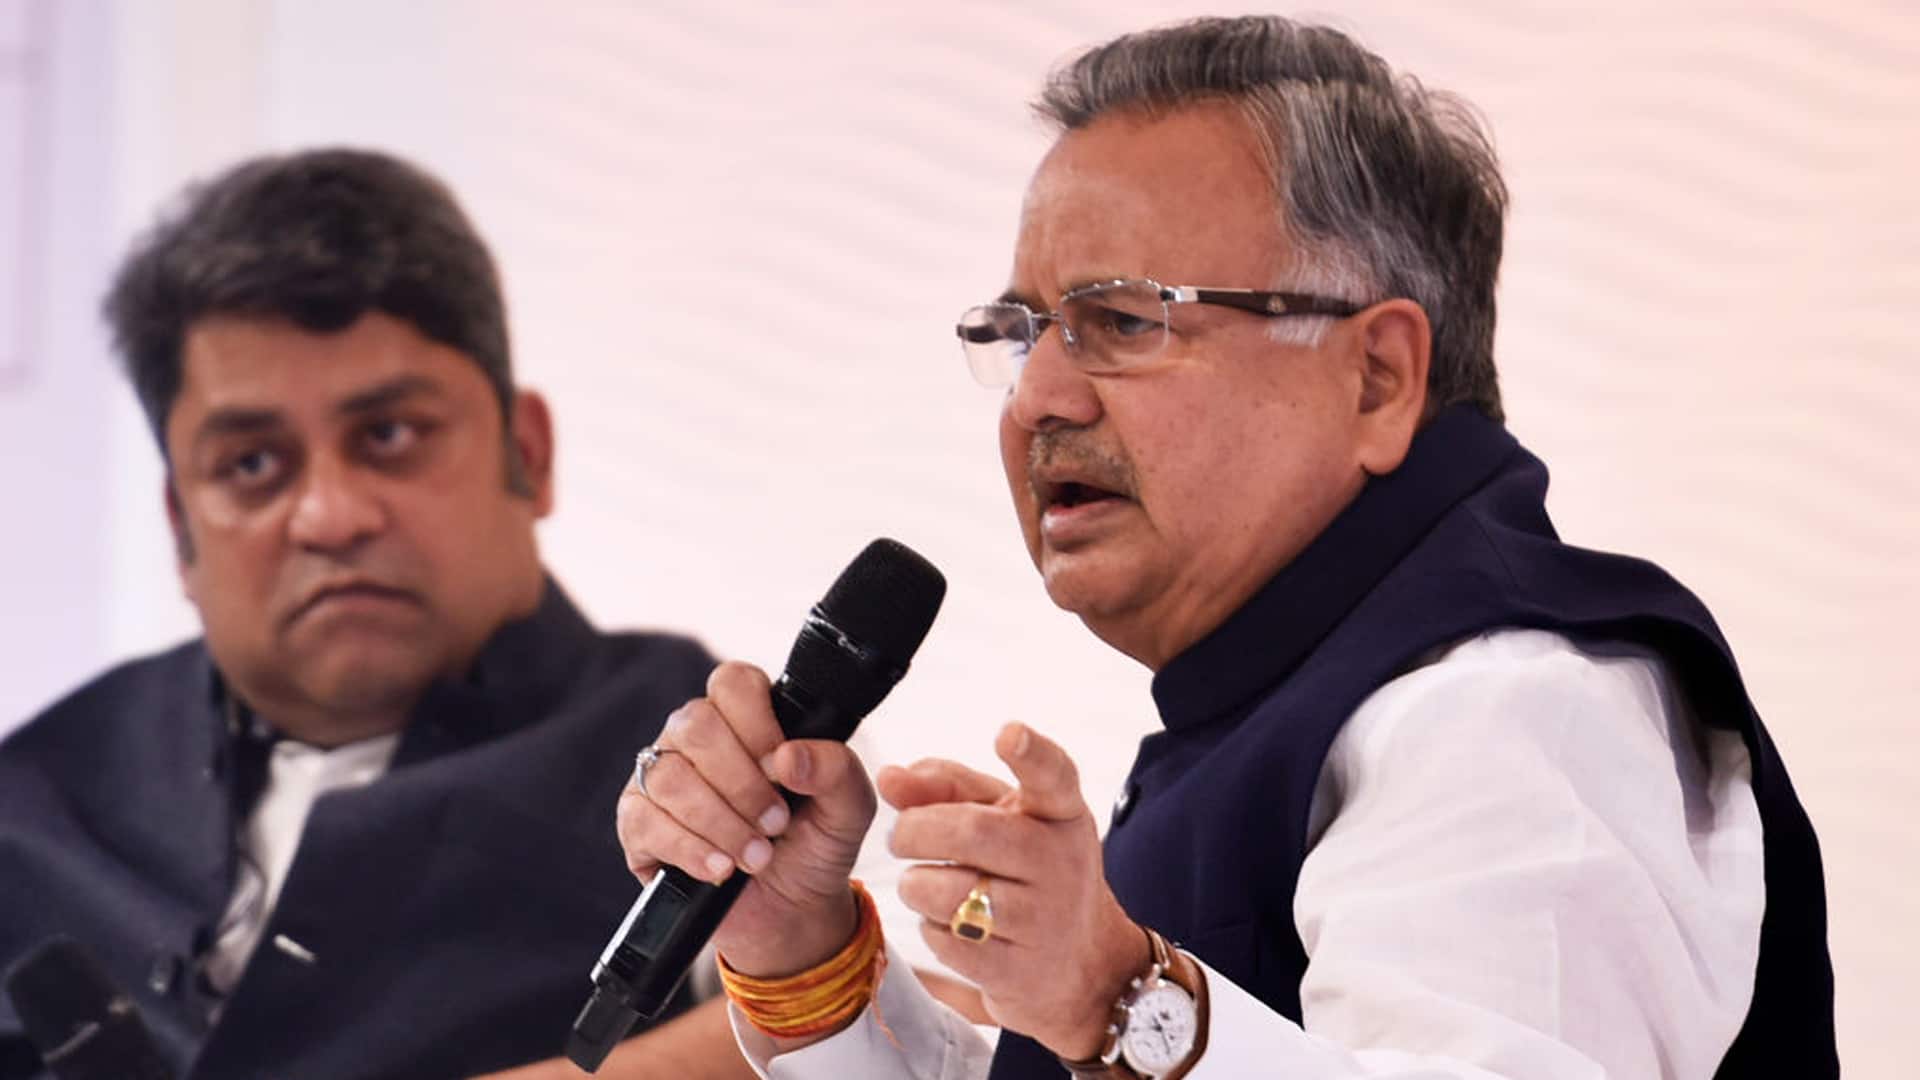 NRC: India is not 'Dharmashala', says Chhattisgarh CM Raman Singh